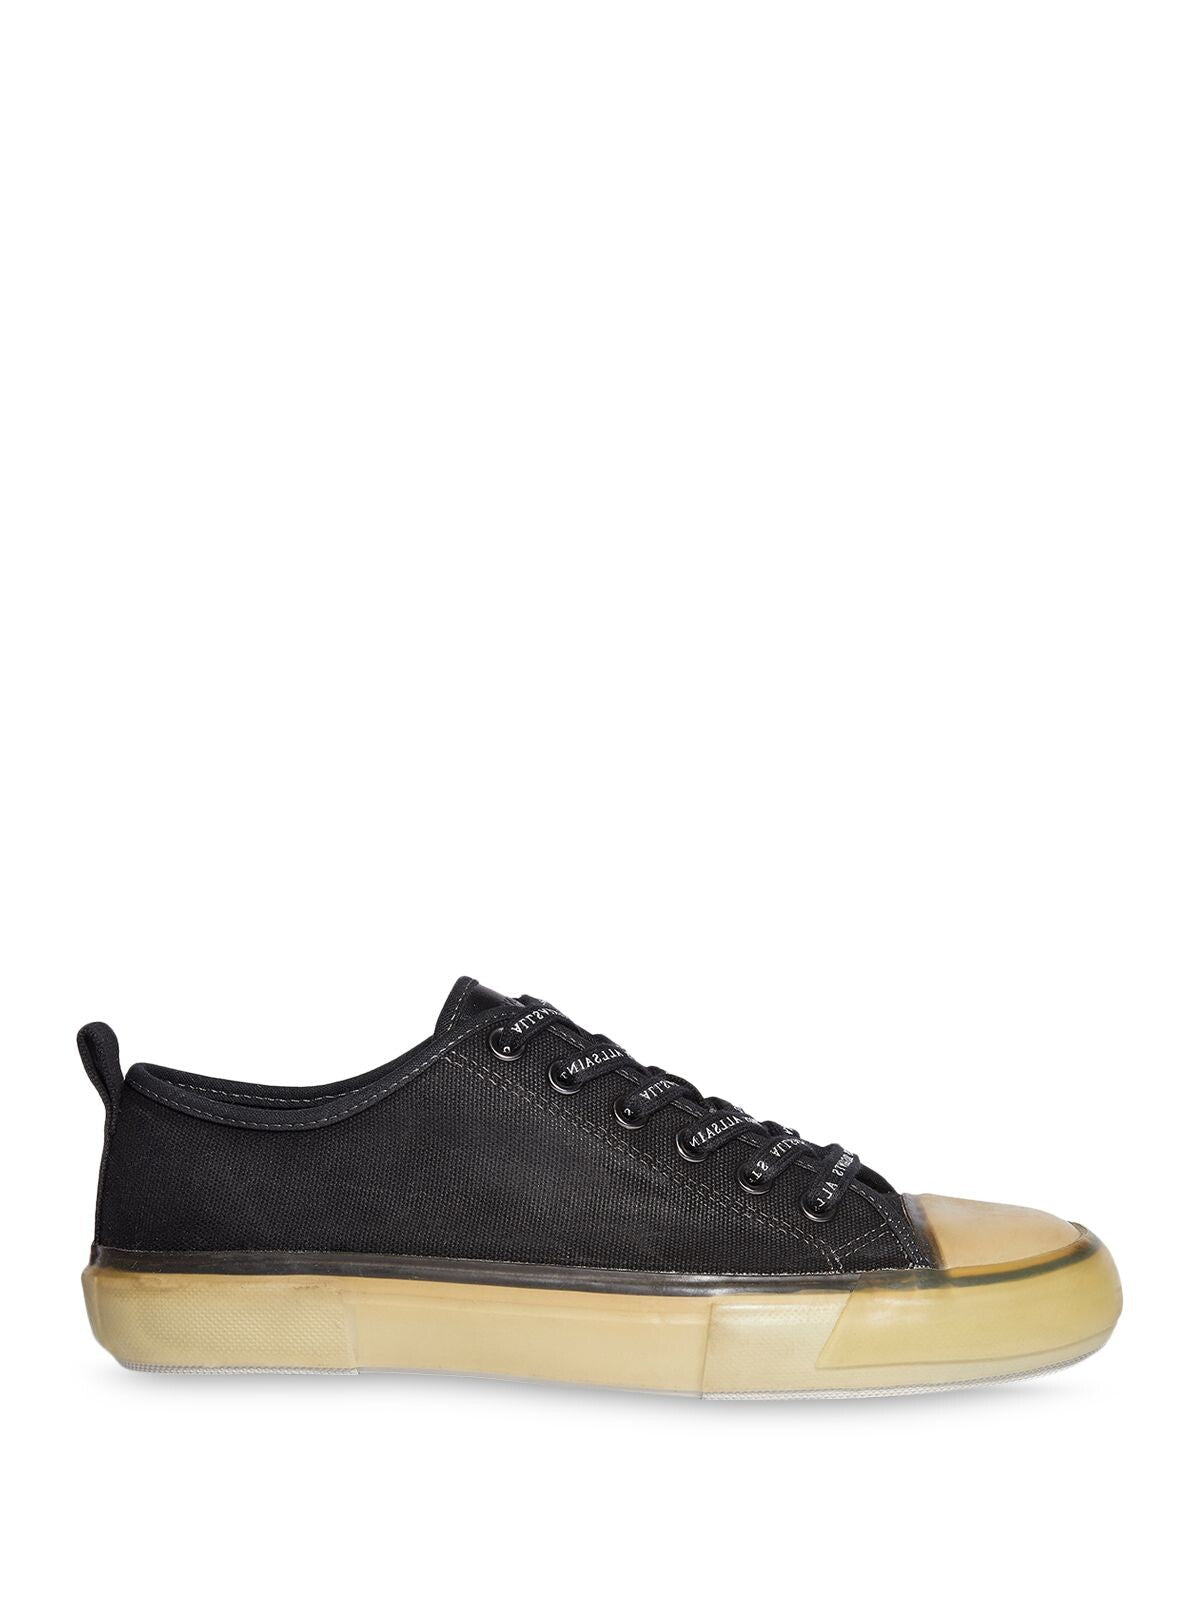 ALLSAINTS Mens Black Padded Logo Jaxon Cap Toe Platform Lace-Up Leather Athletic Sneakers Shoes 10